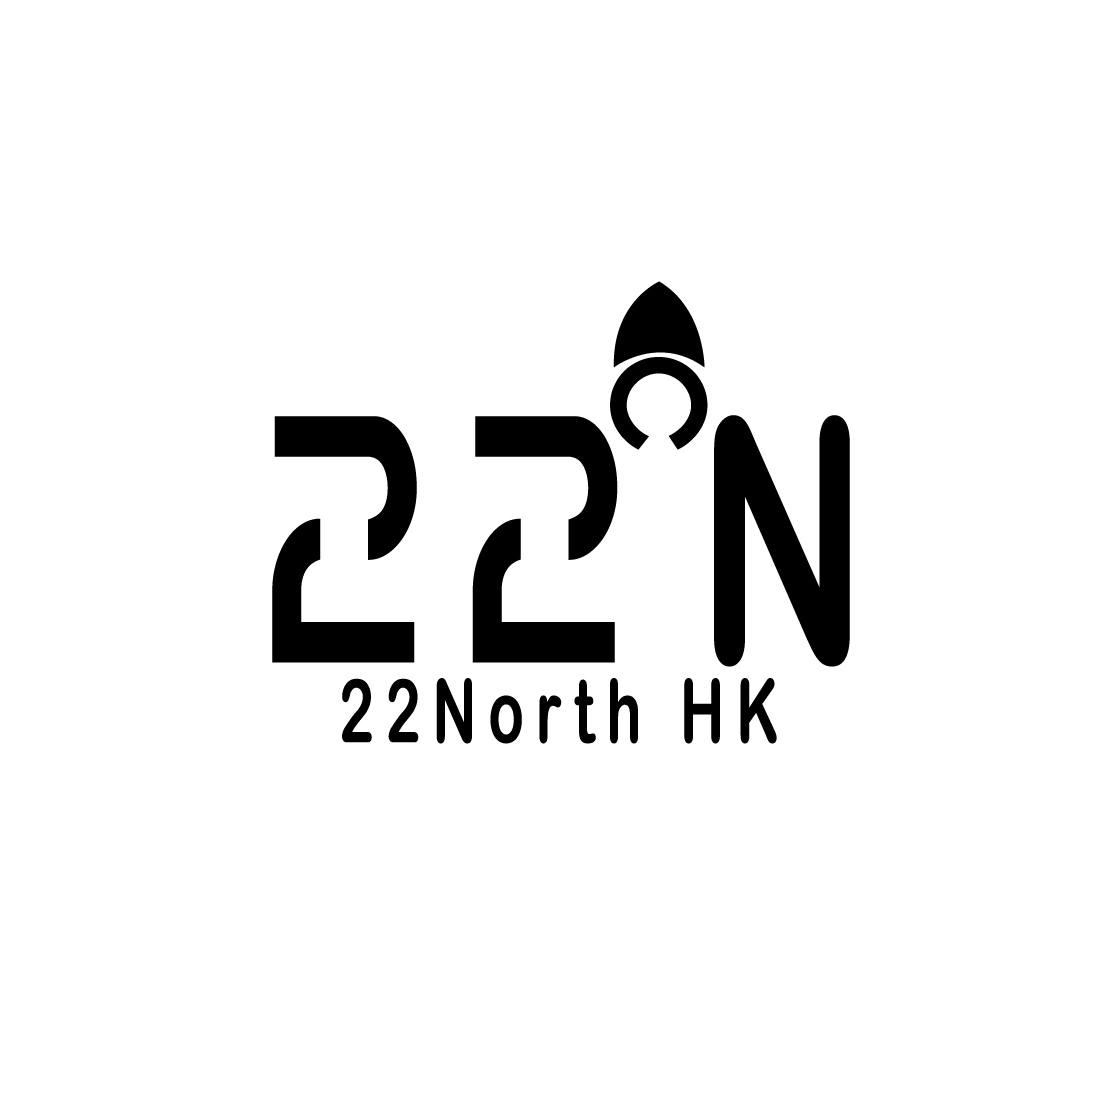 22 Degree North - TShirt Design cover image.